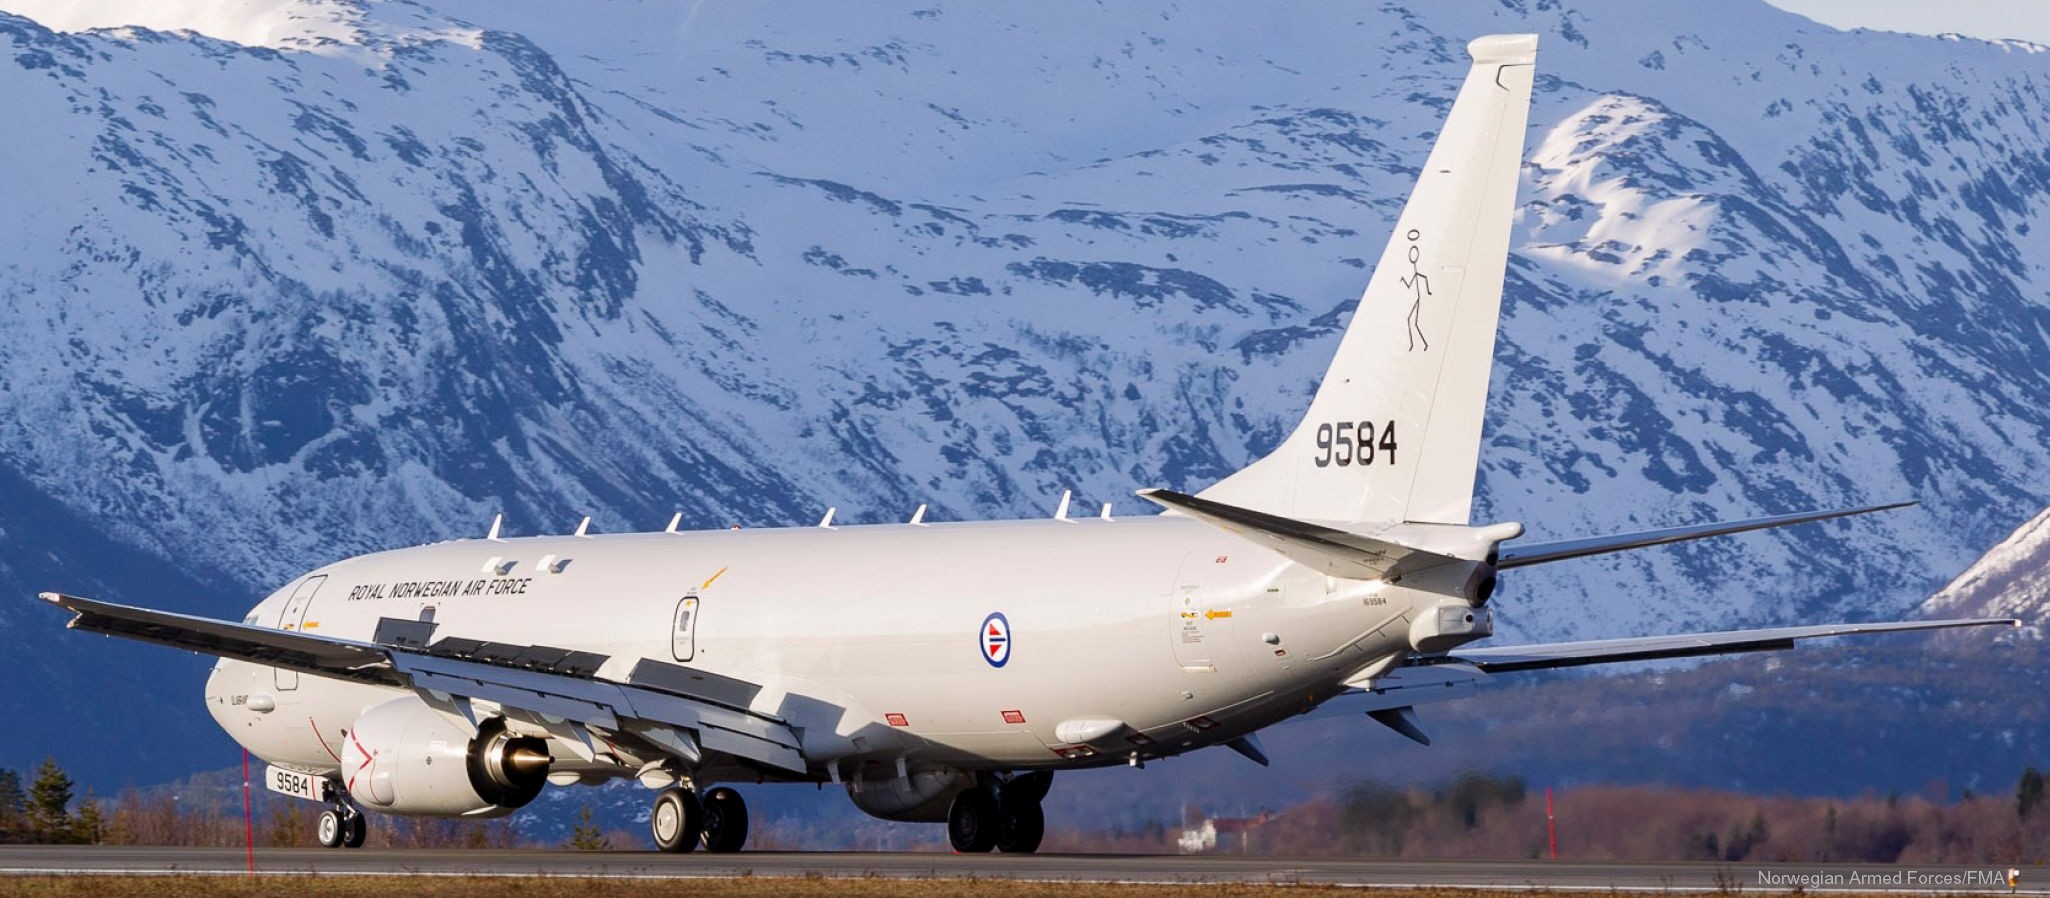 p-8a poseidon maritime patrol aircraft royal norwegian air force luftforsvaret 9584 ulabrand 03